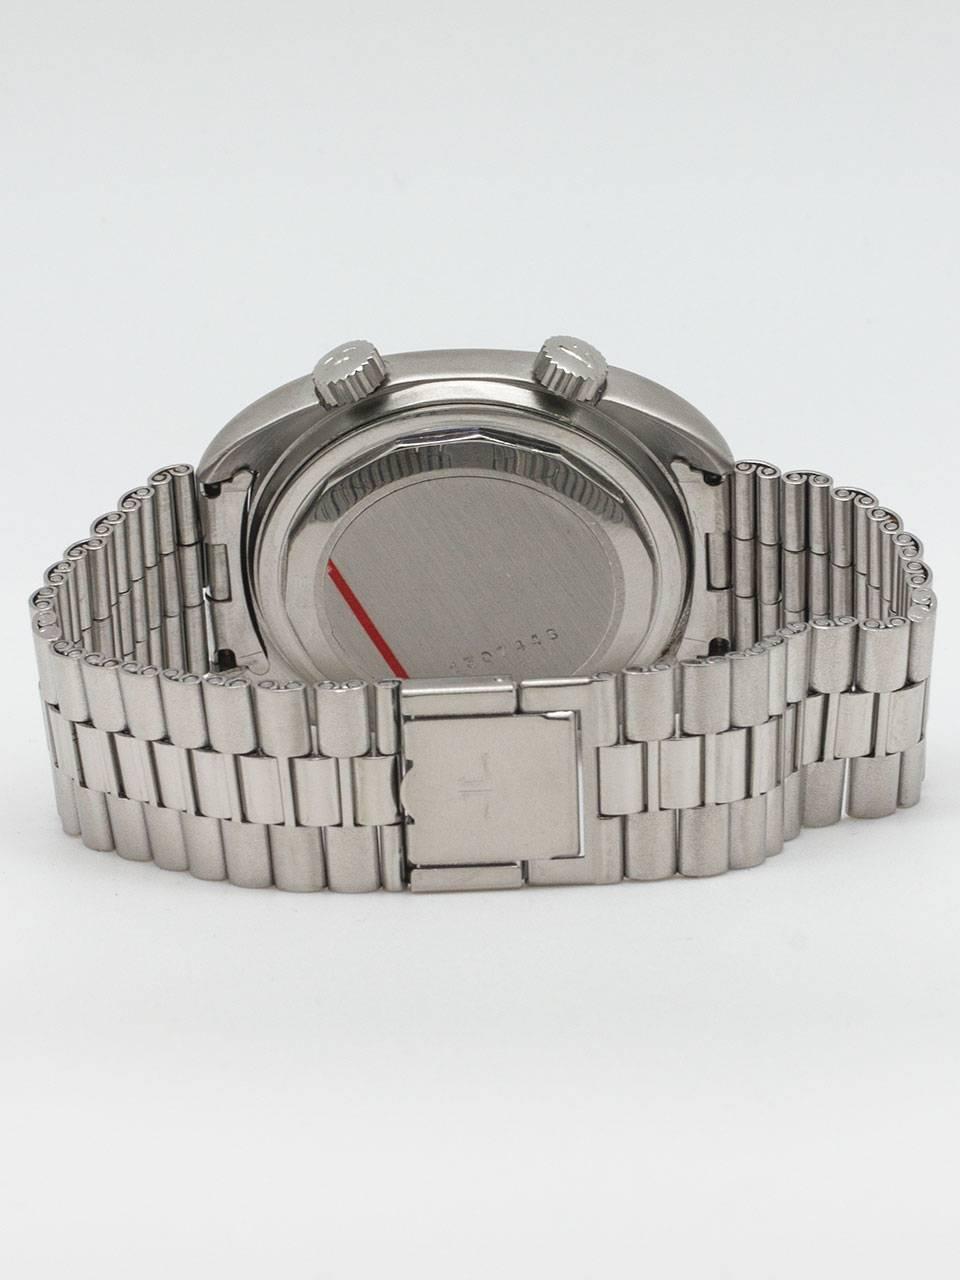 Men's Jaeger LeCoultre Stainless Steel Alarm Wristwatch ref E871 